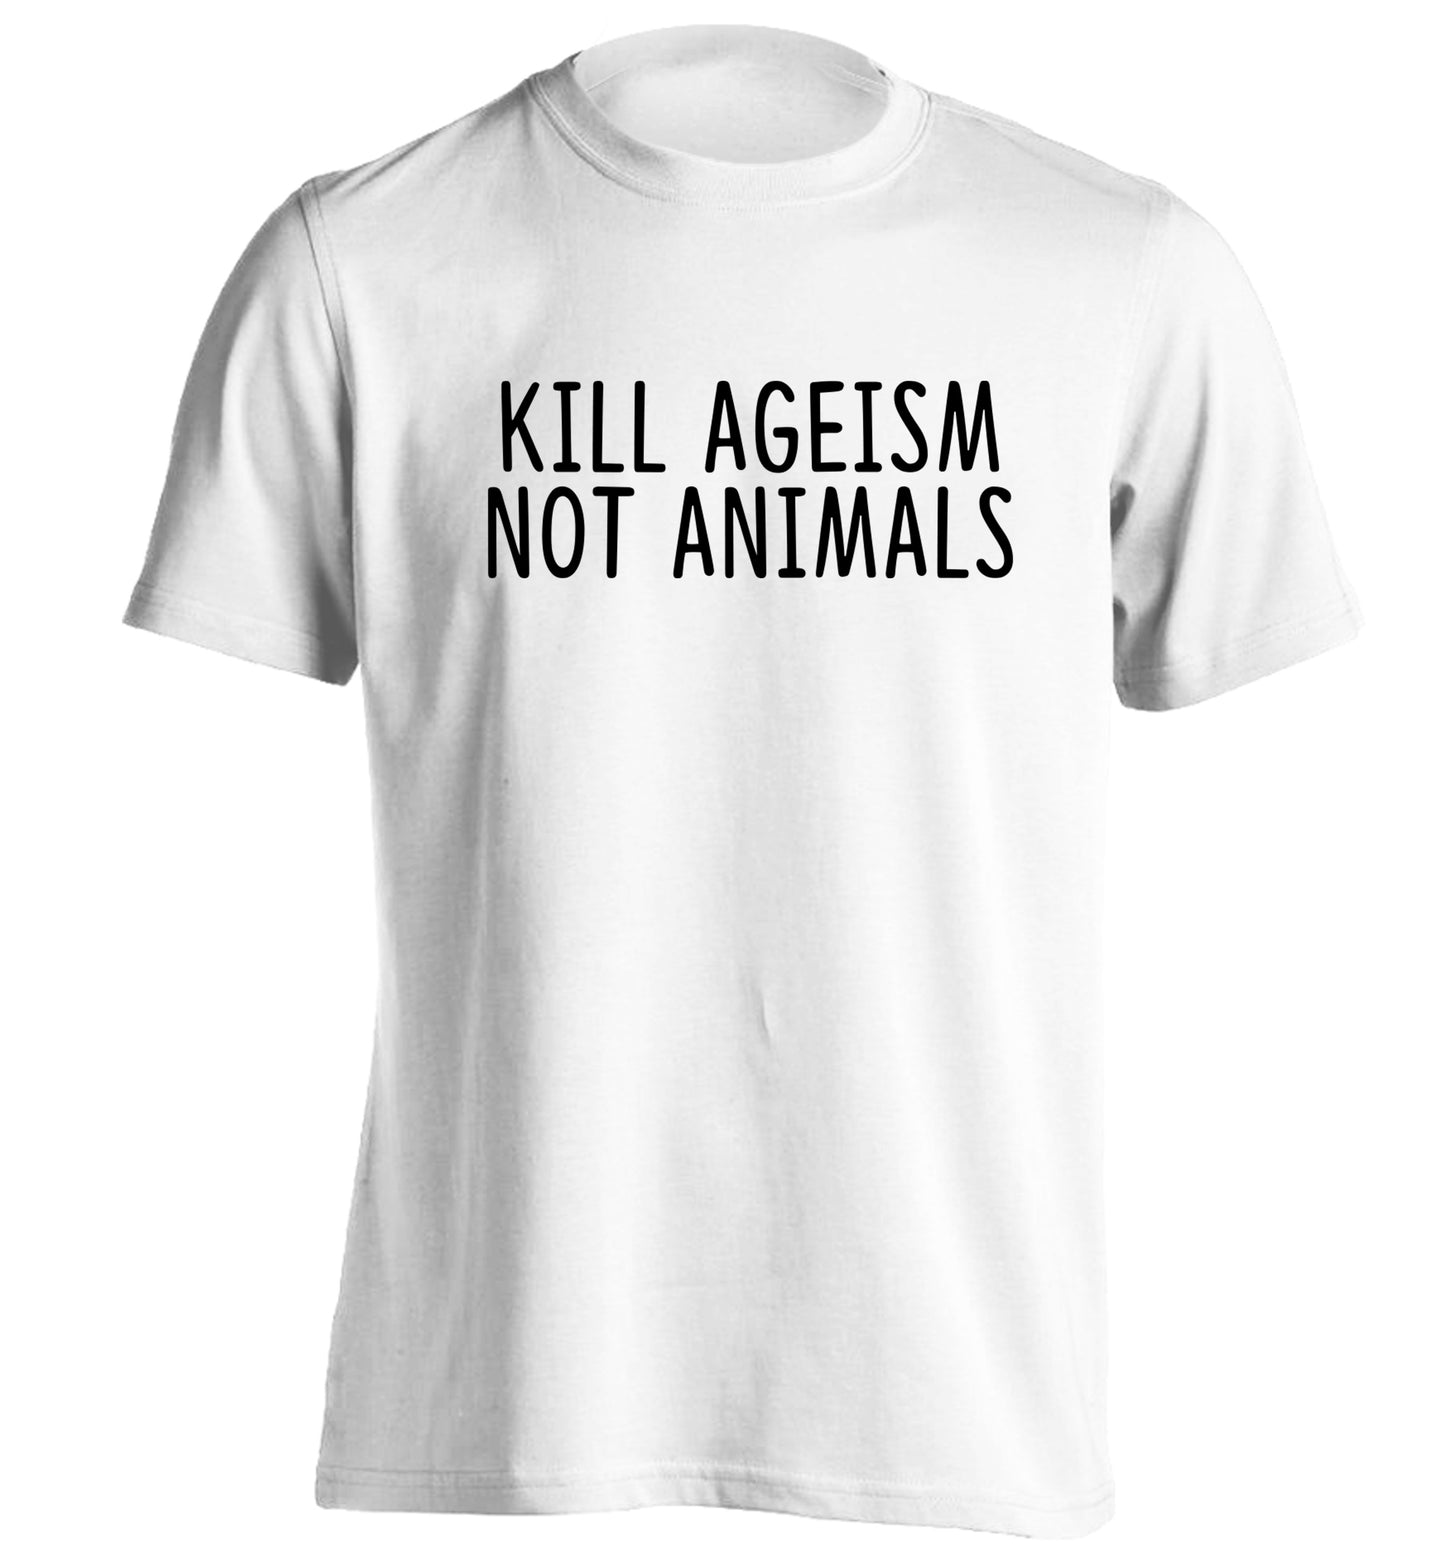 Kill Ageism Not Animals adults unisex white Tshirt 2XL